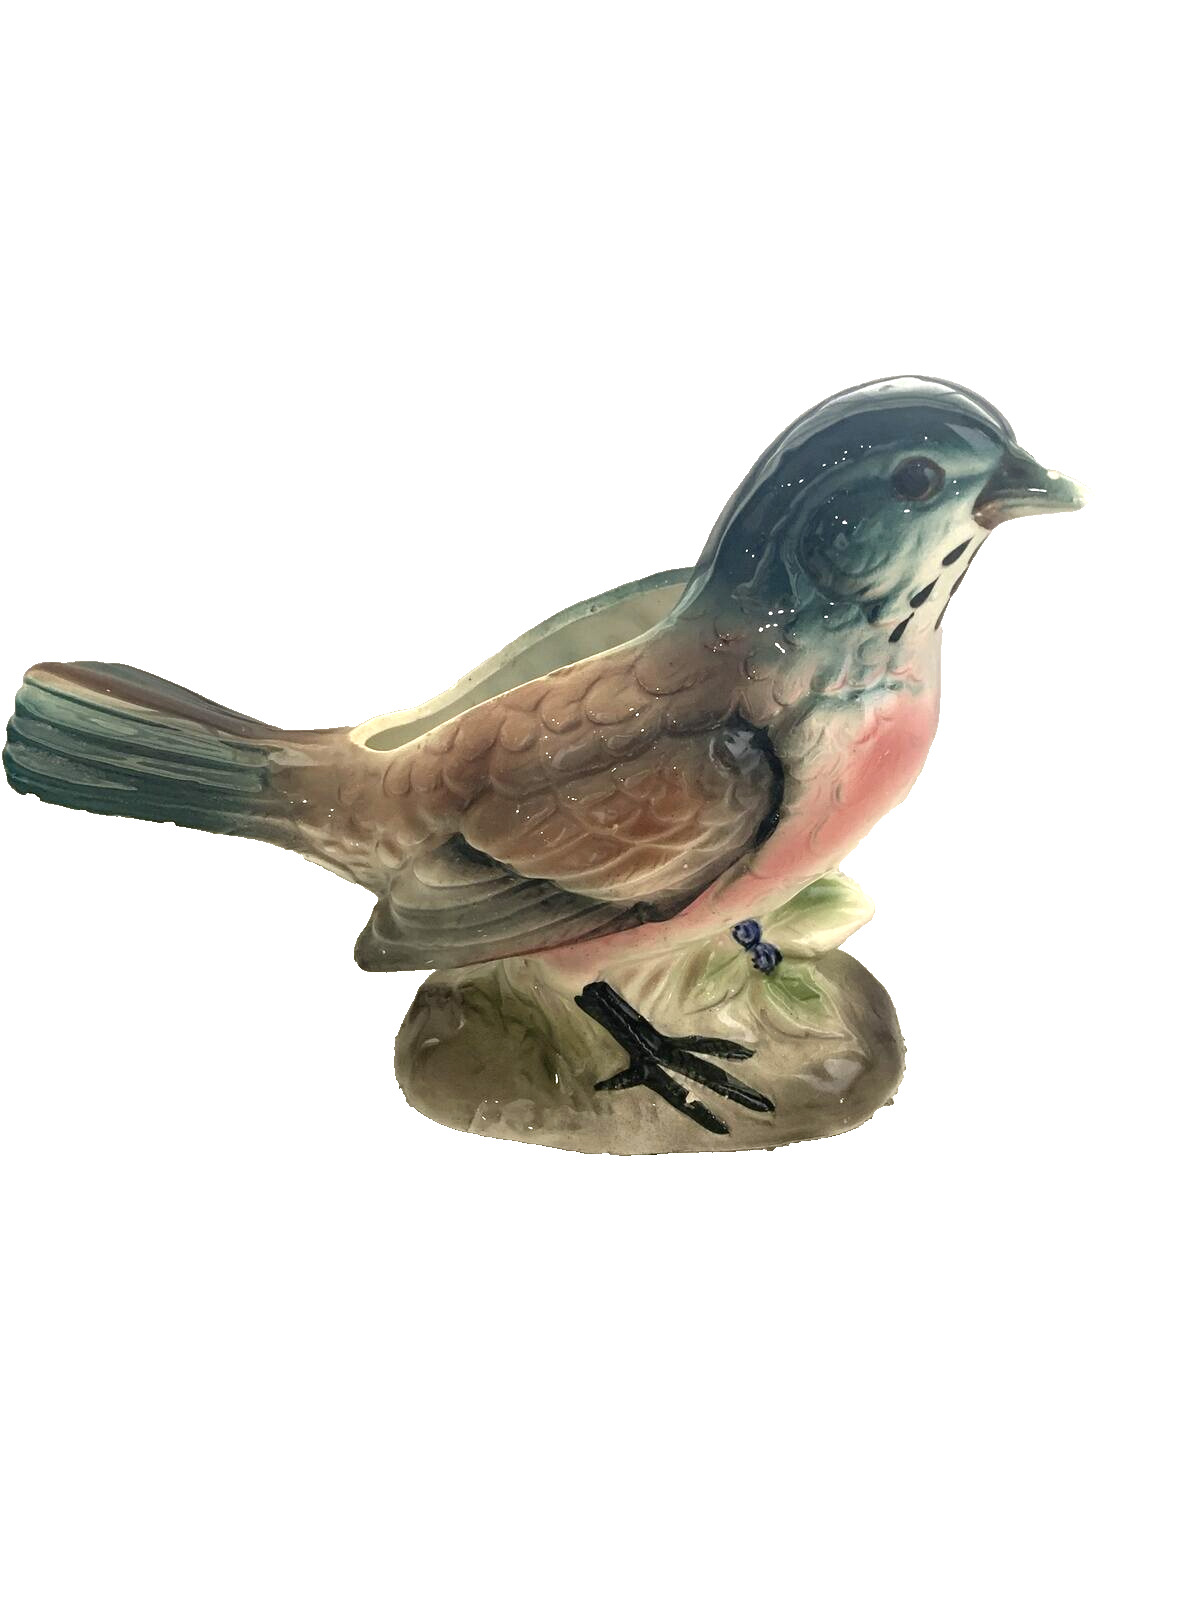 RELPO Vintage Mid-Century Ceramic Planter Beautiful Bluebird